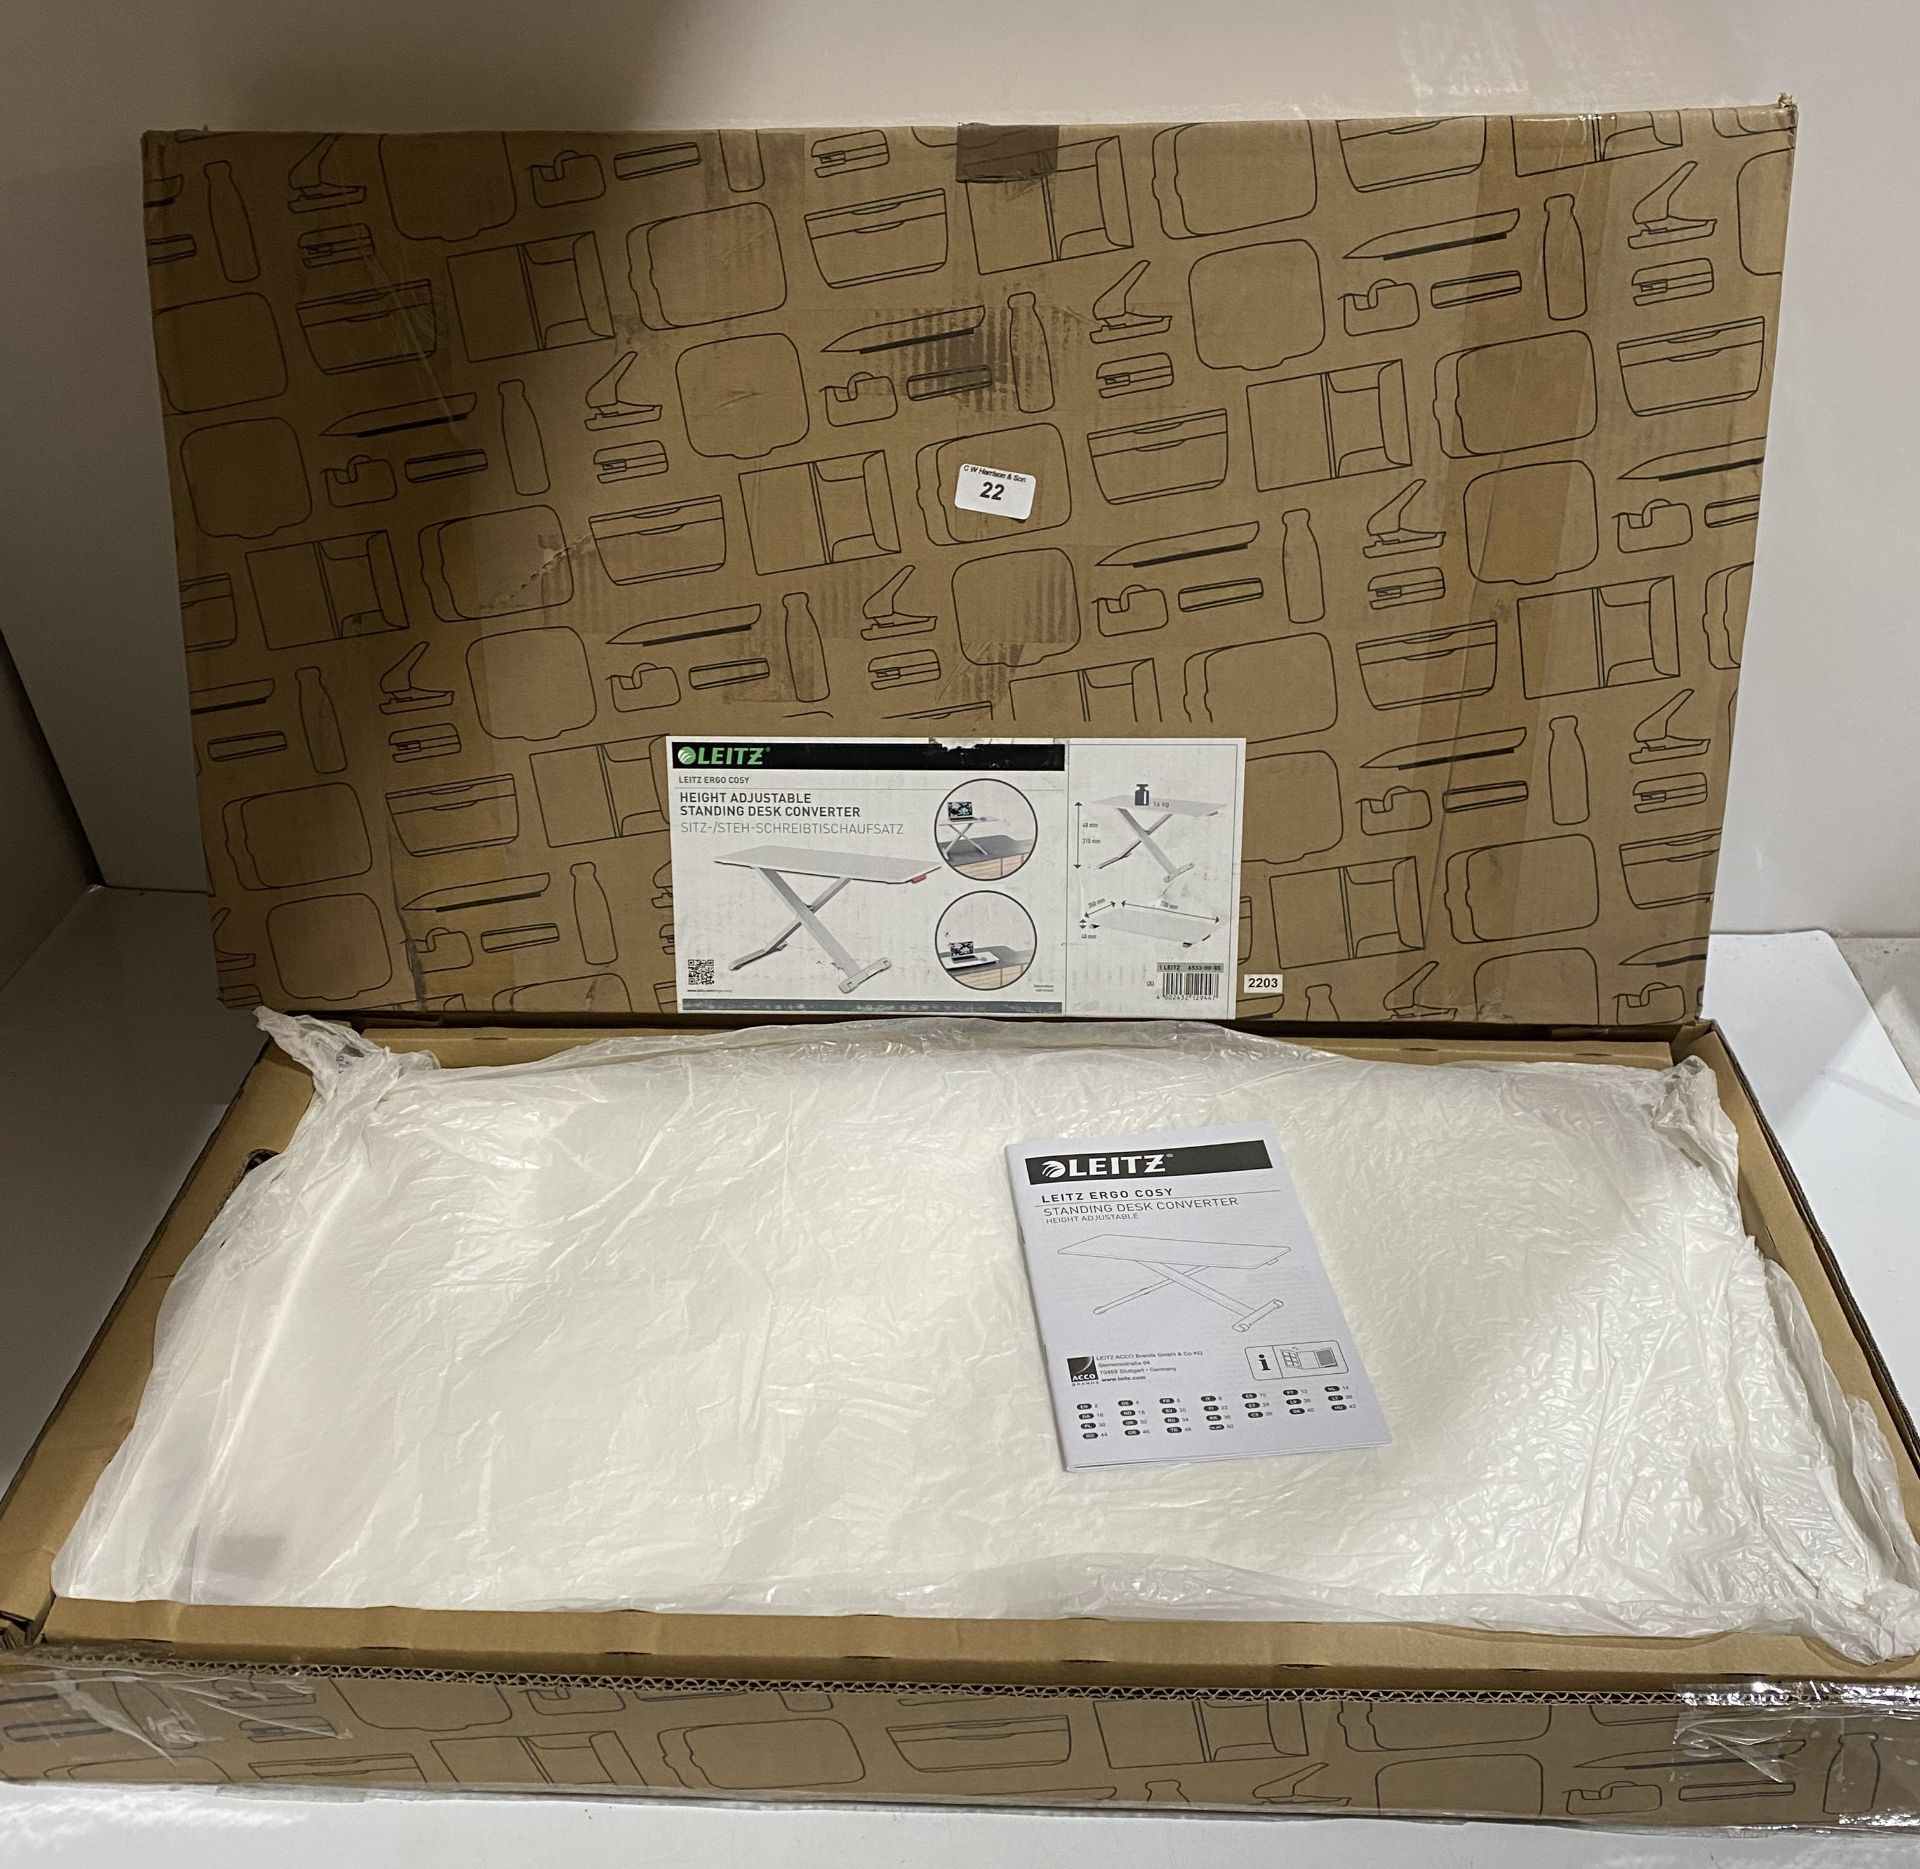 1 x new boxed Leitz ergonomic height adjustable standing desk convertor (saleroom location: H11)